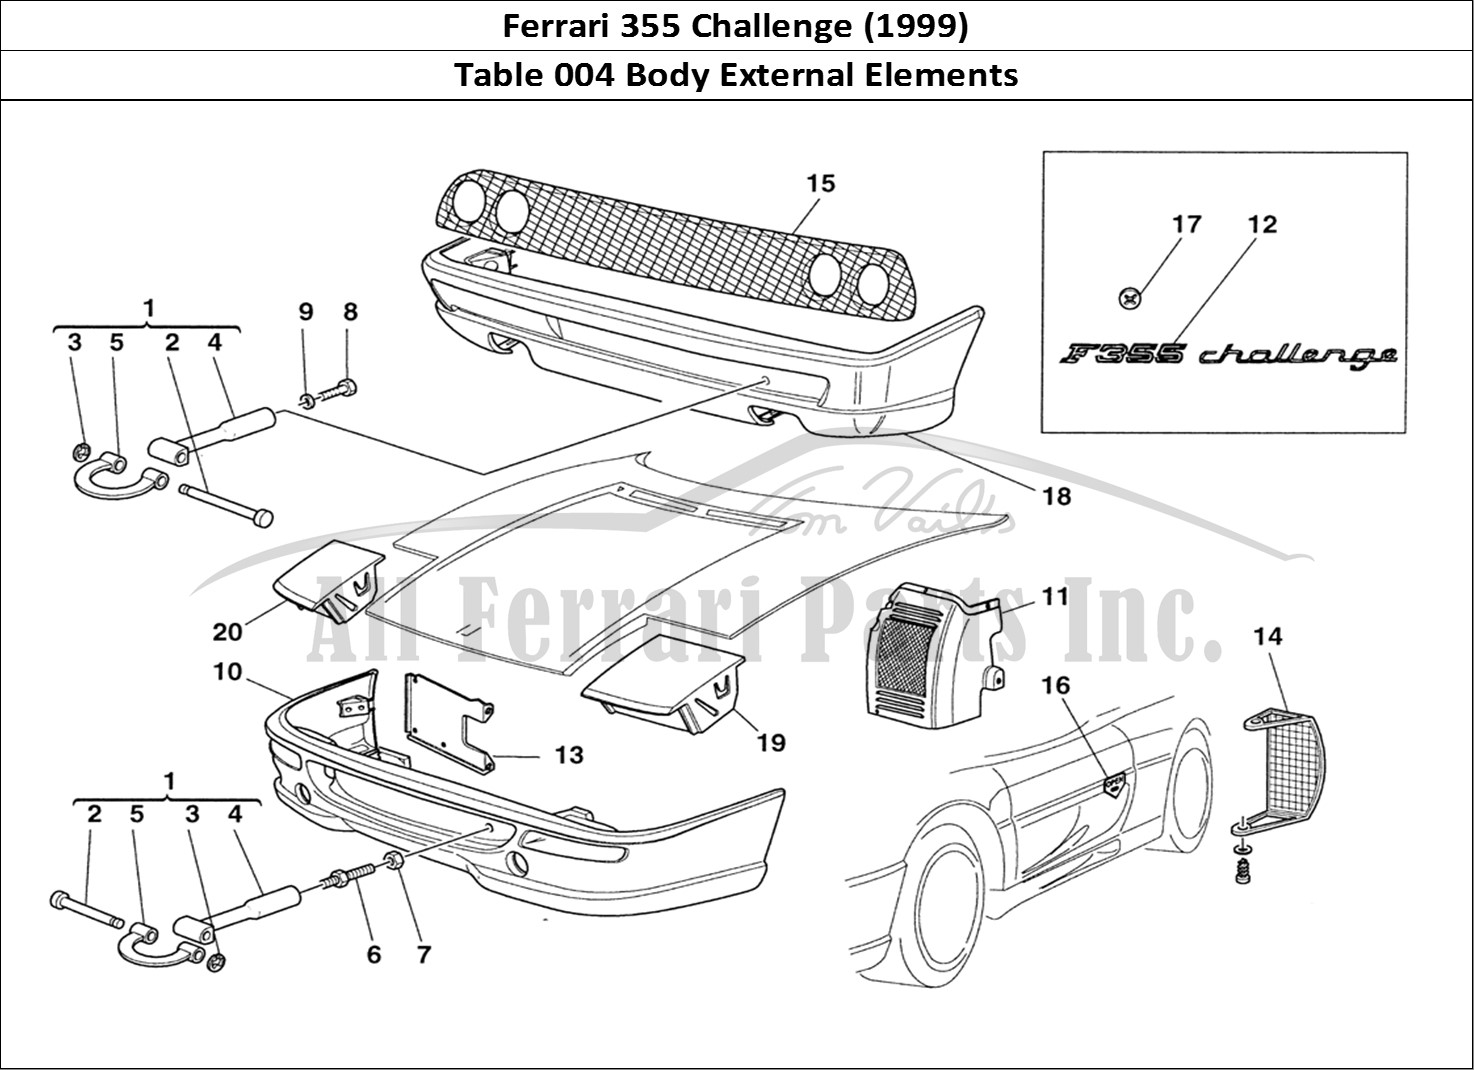 Buy original Ferrari 355 Challenge (1999) 004 Body External Elements